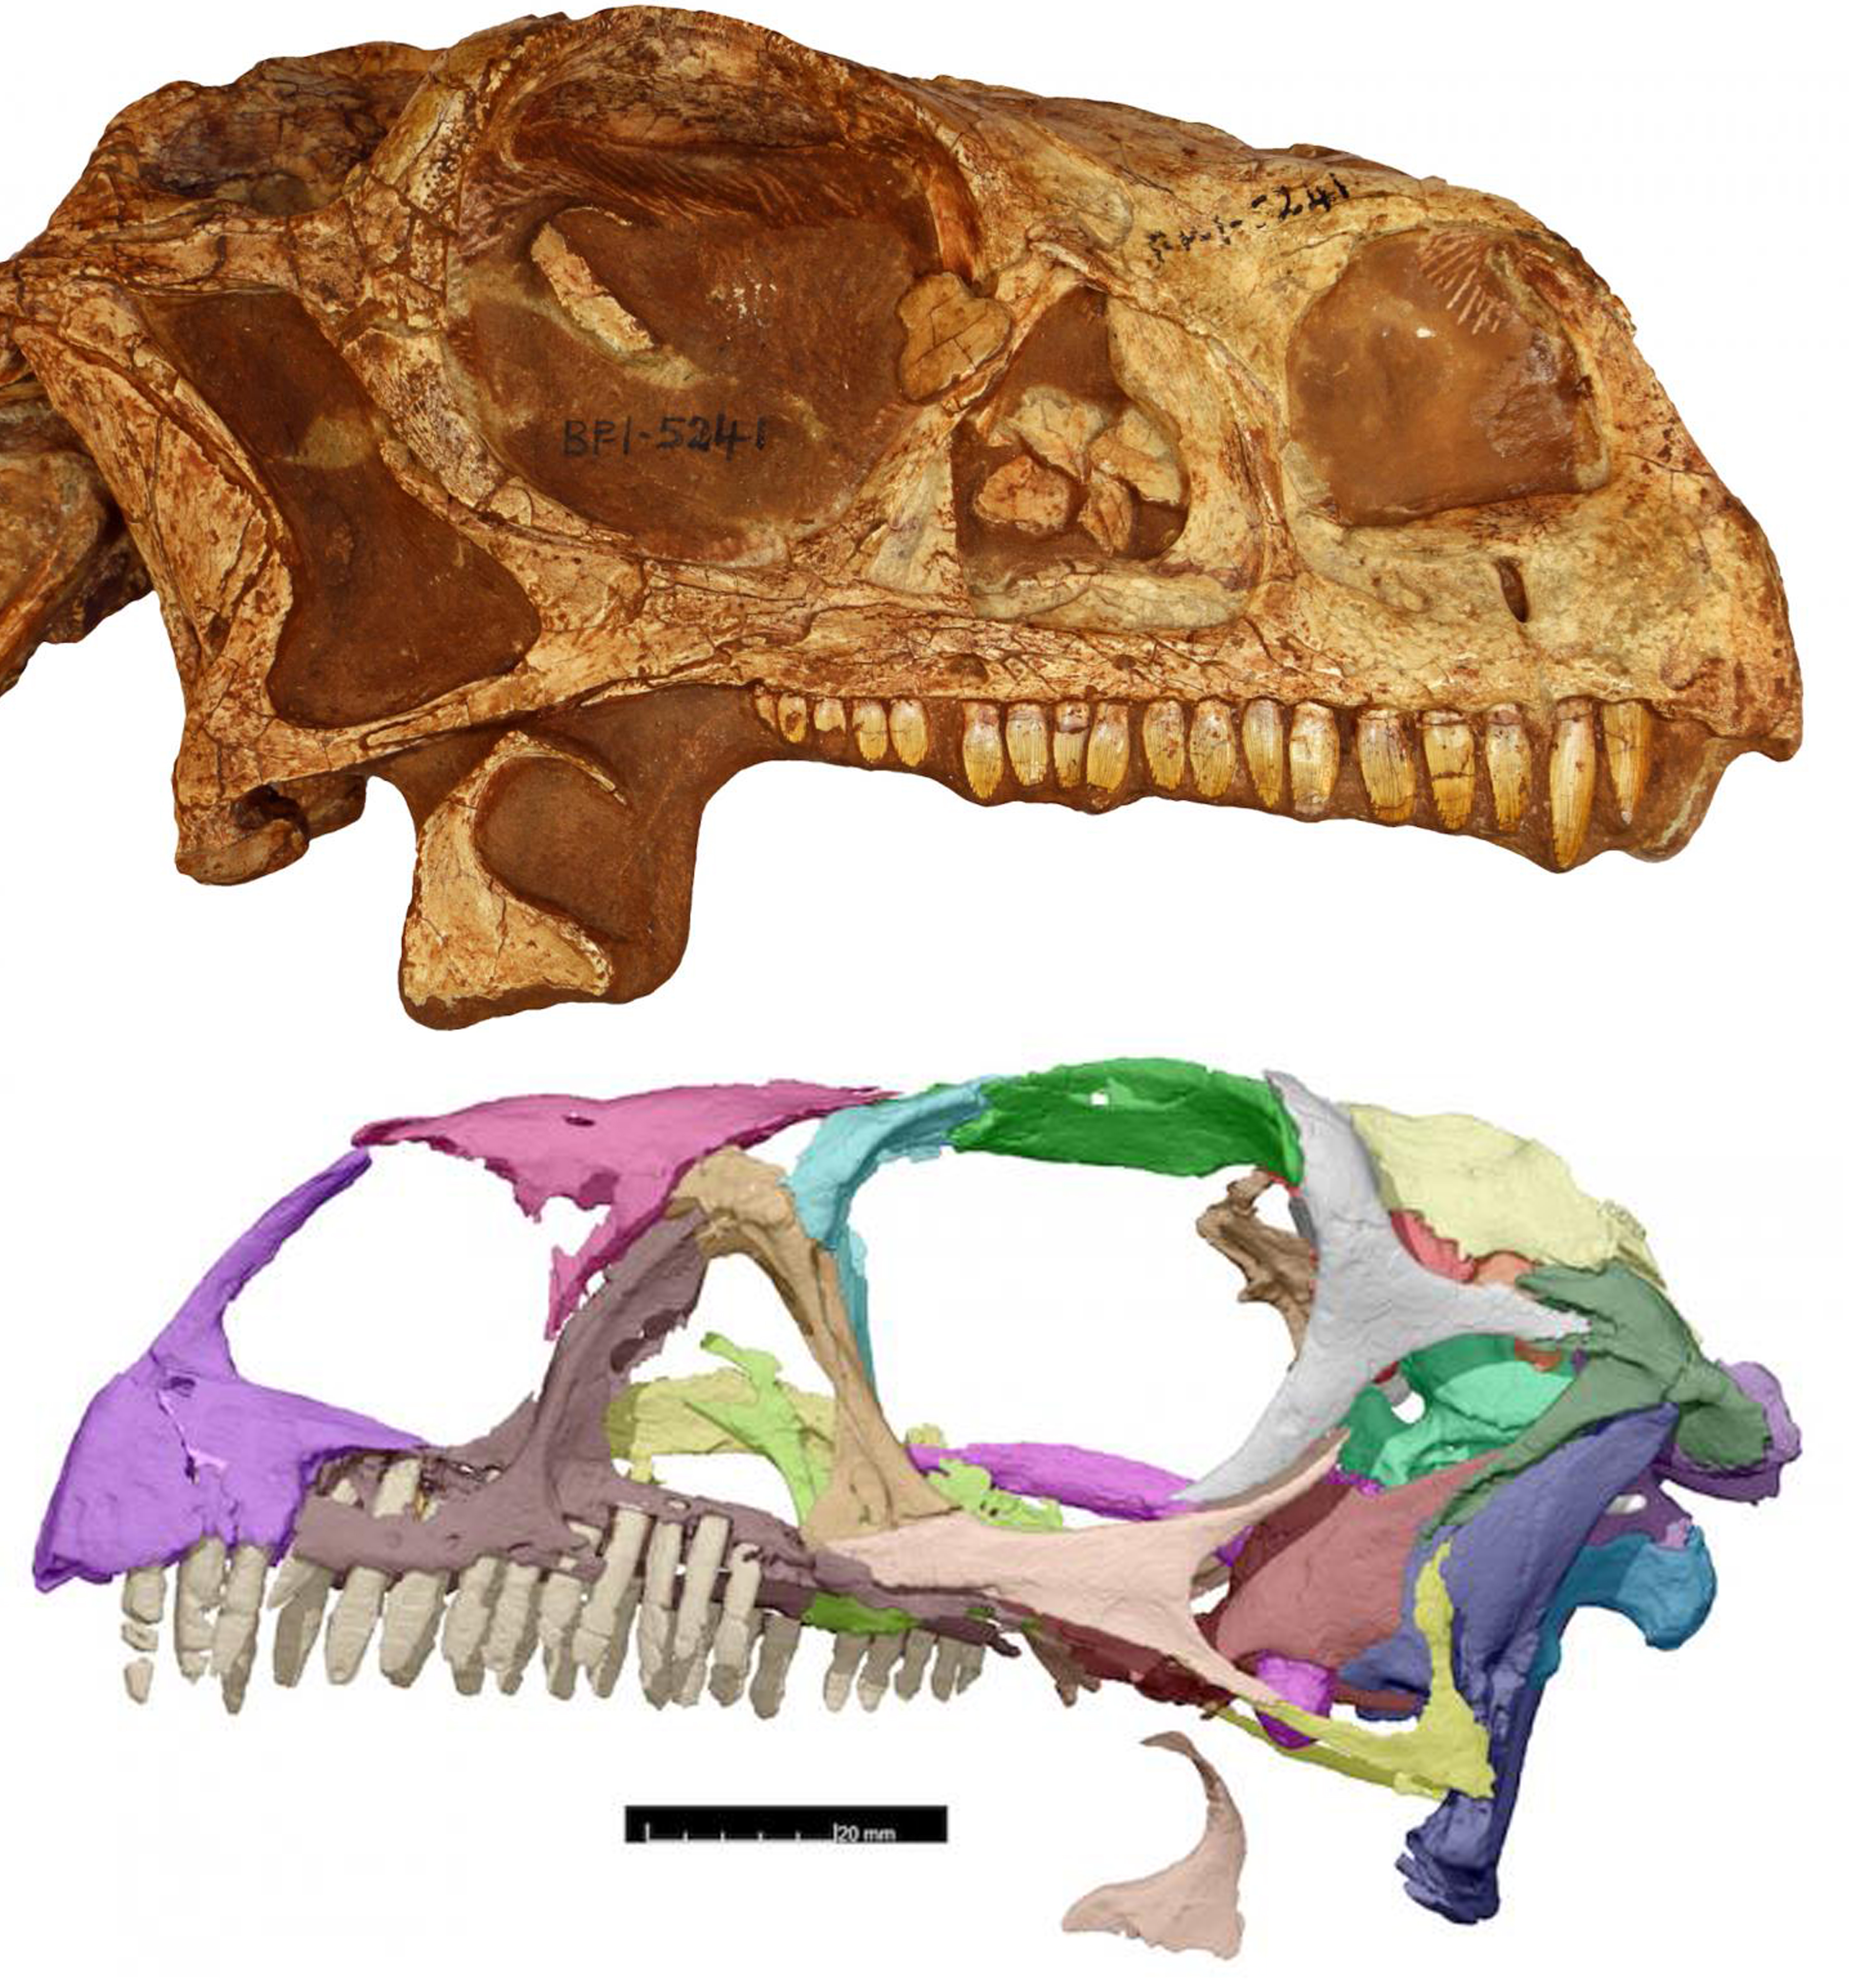 Above, Massospondylus skull and below, the skull after being scanned.